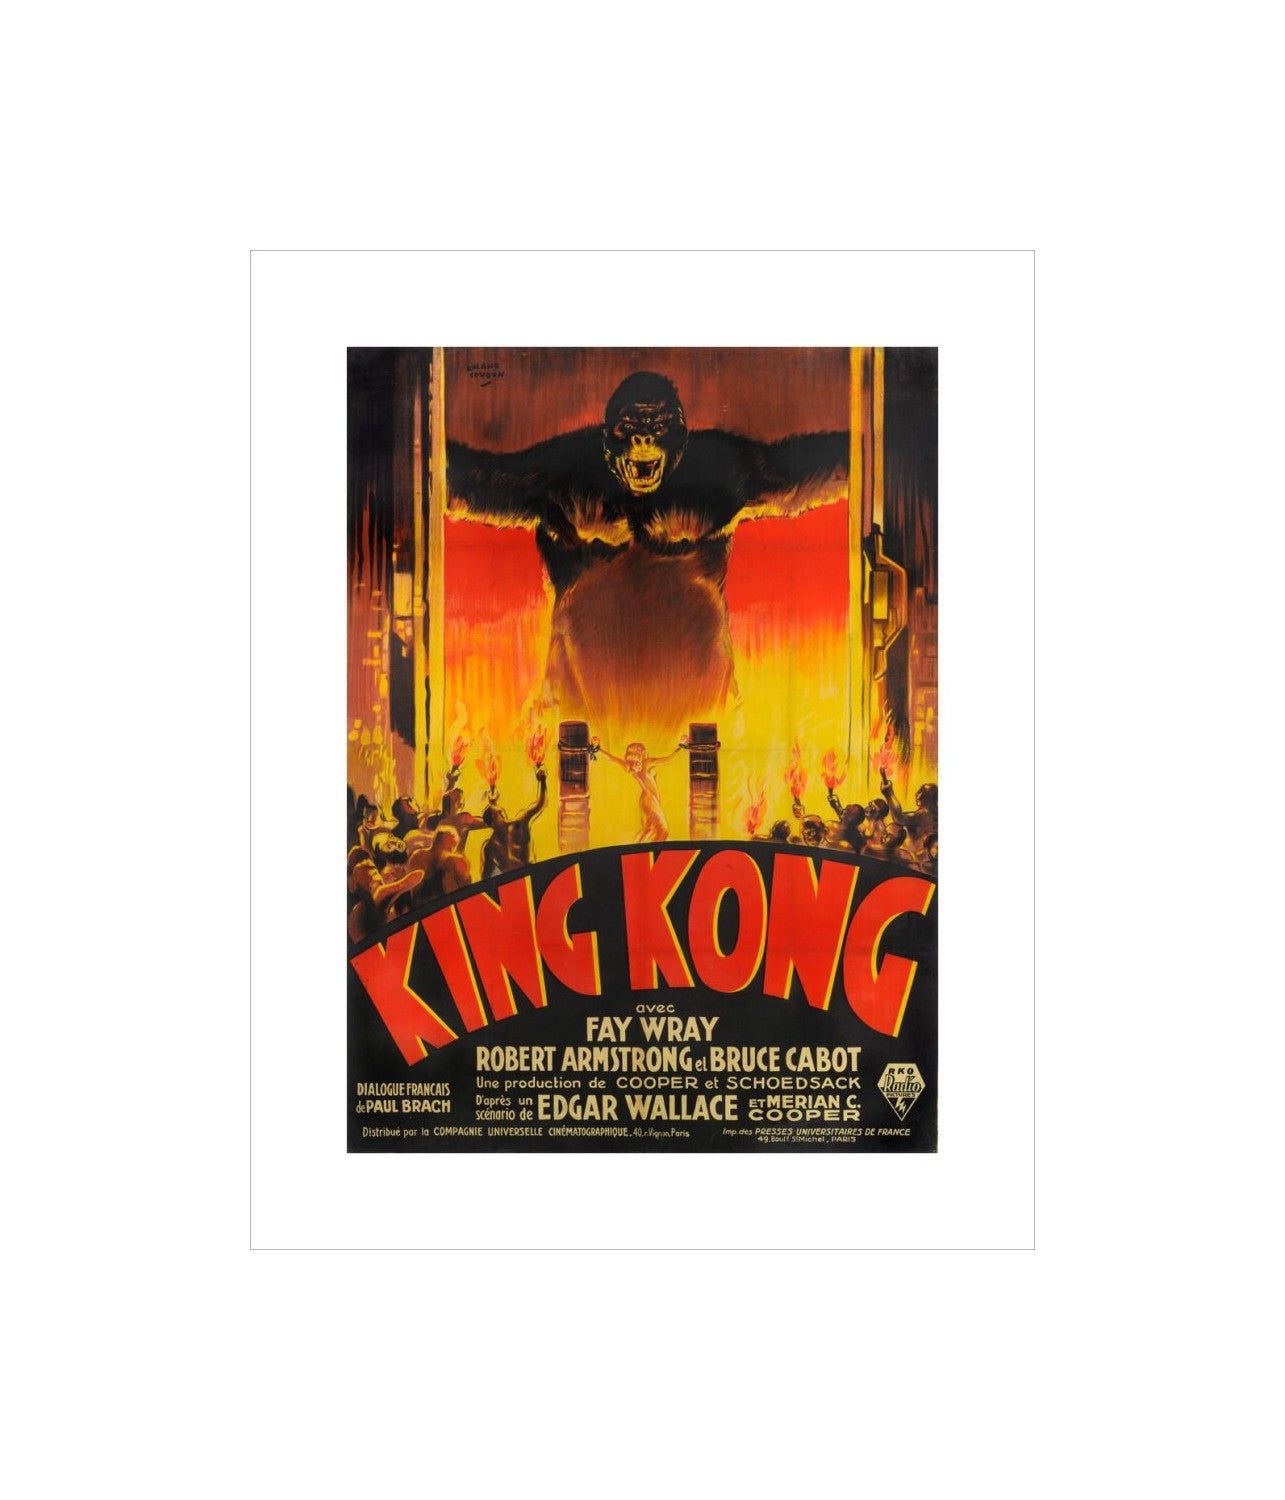 Impression de King Kong